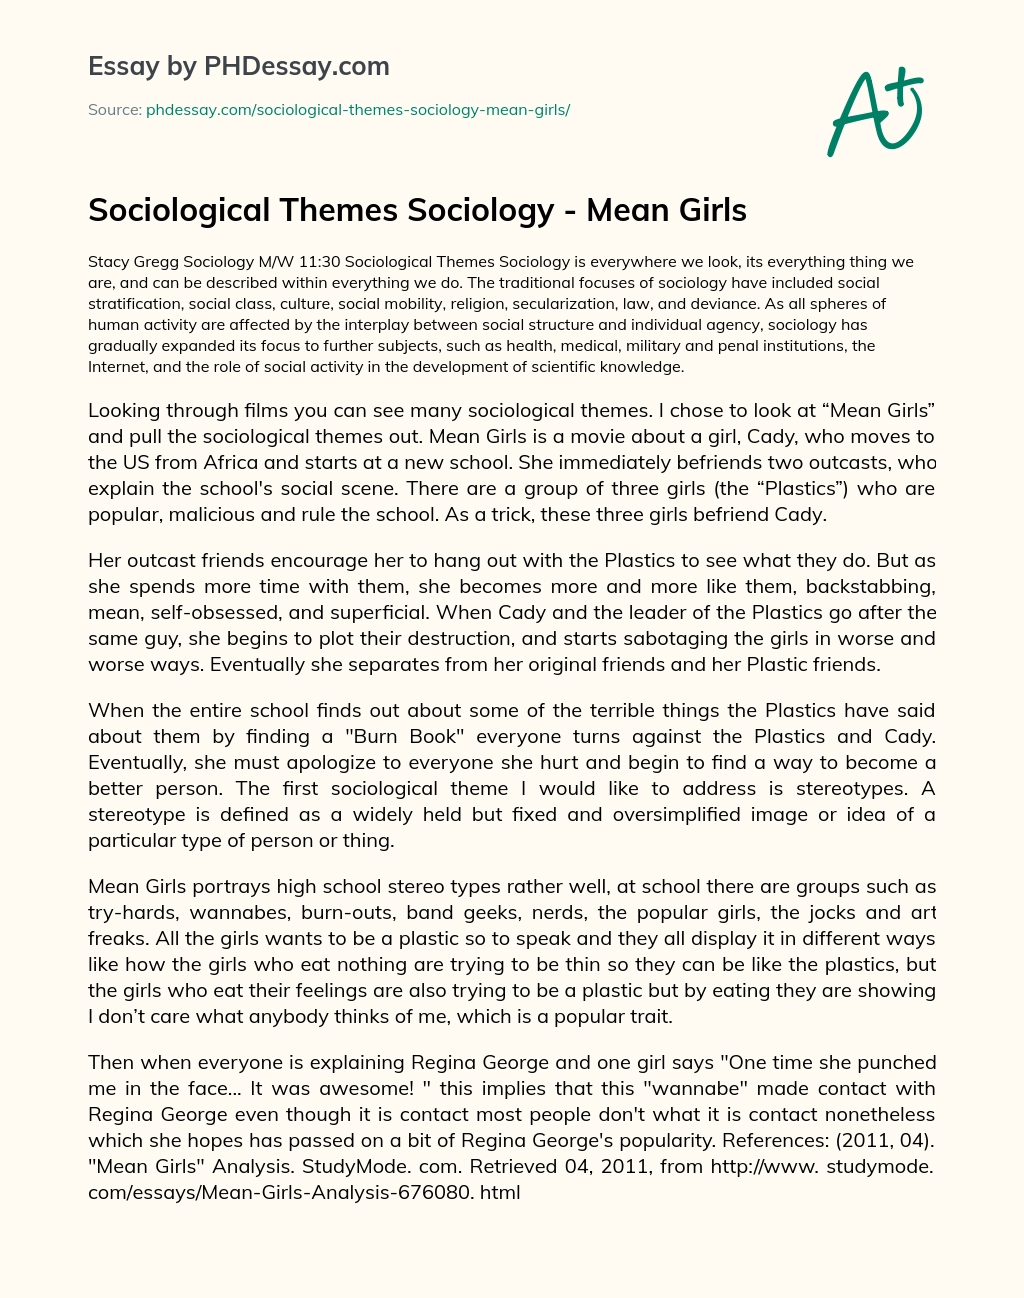 Sociological Themes Sociology – Mean Girls essay